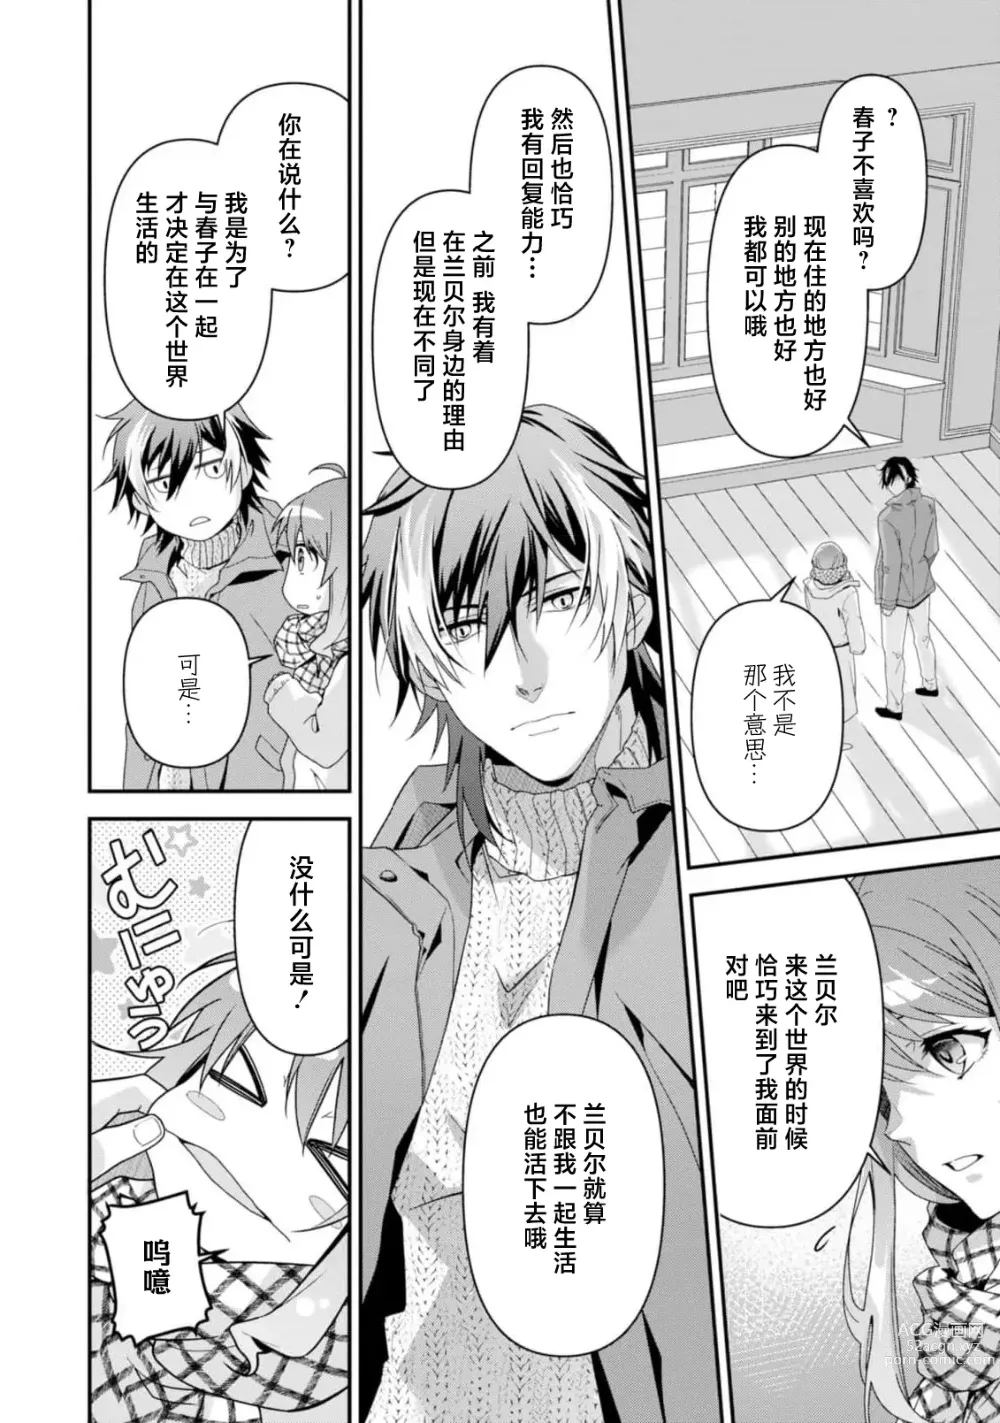 Page 266 of manga 最终BOSS转生而来，因此拿下了他的童贞 1-9 end